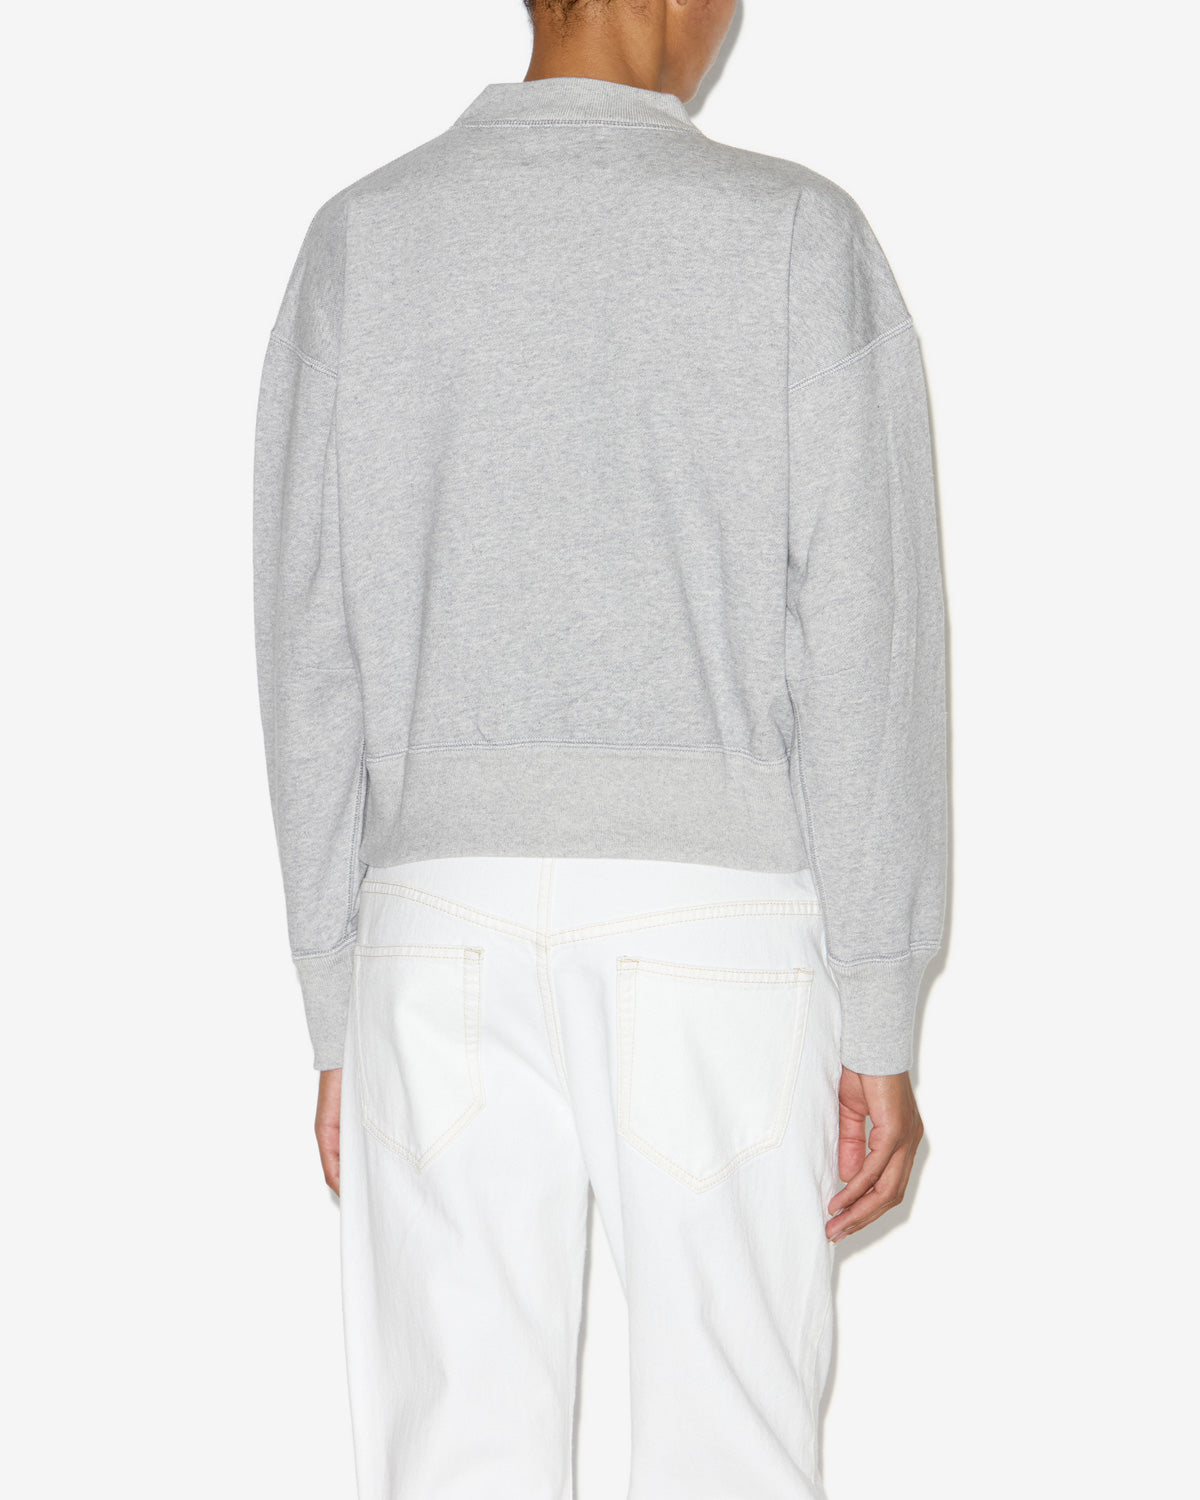 Moby sweatshirt Woman Gray-white 3